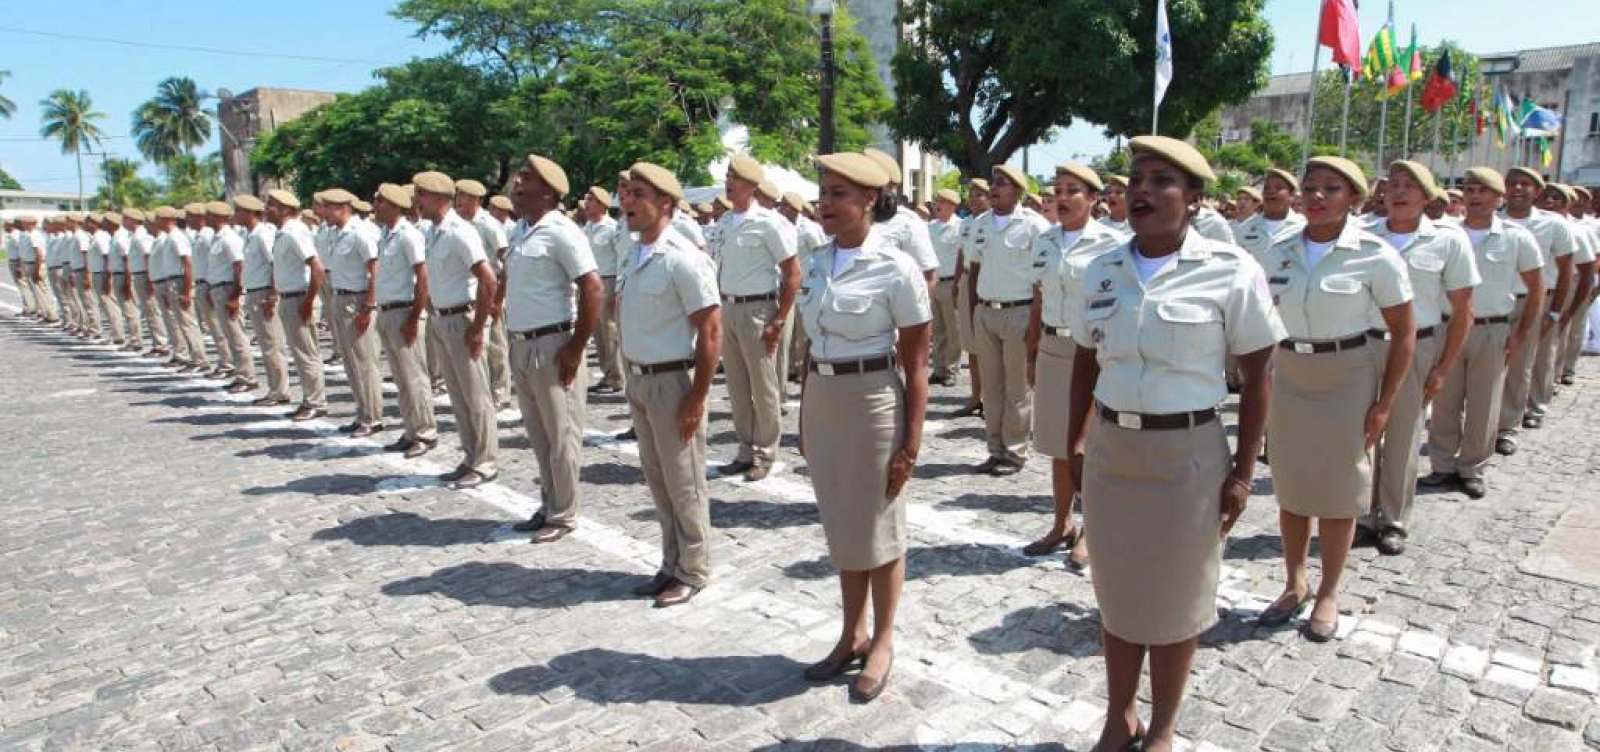 Governo da Bahia vai publicar nesta sexta resultado final de concurso da PM e bombeiros